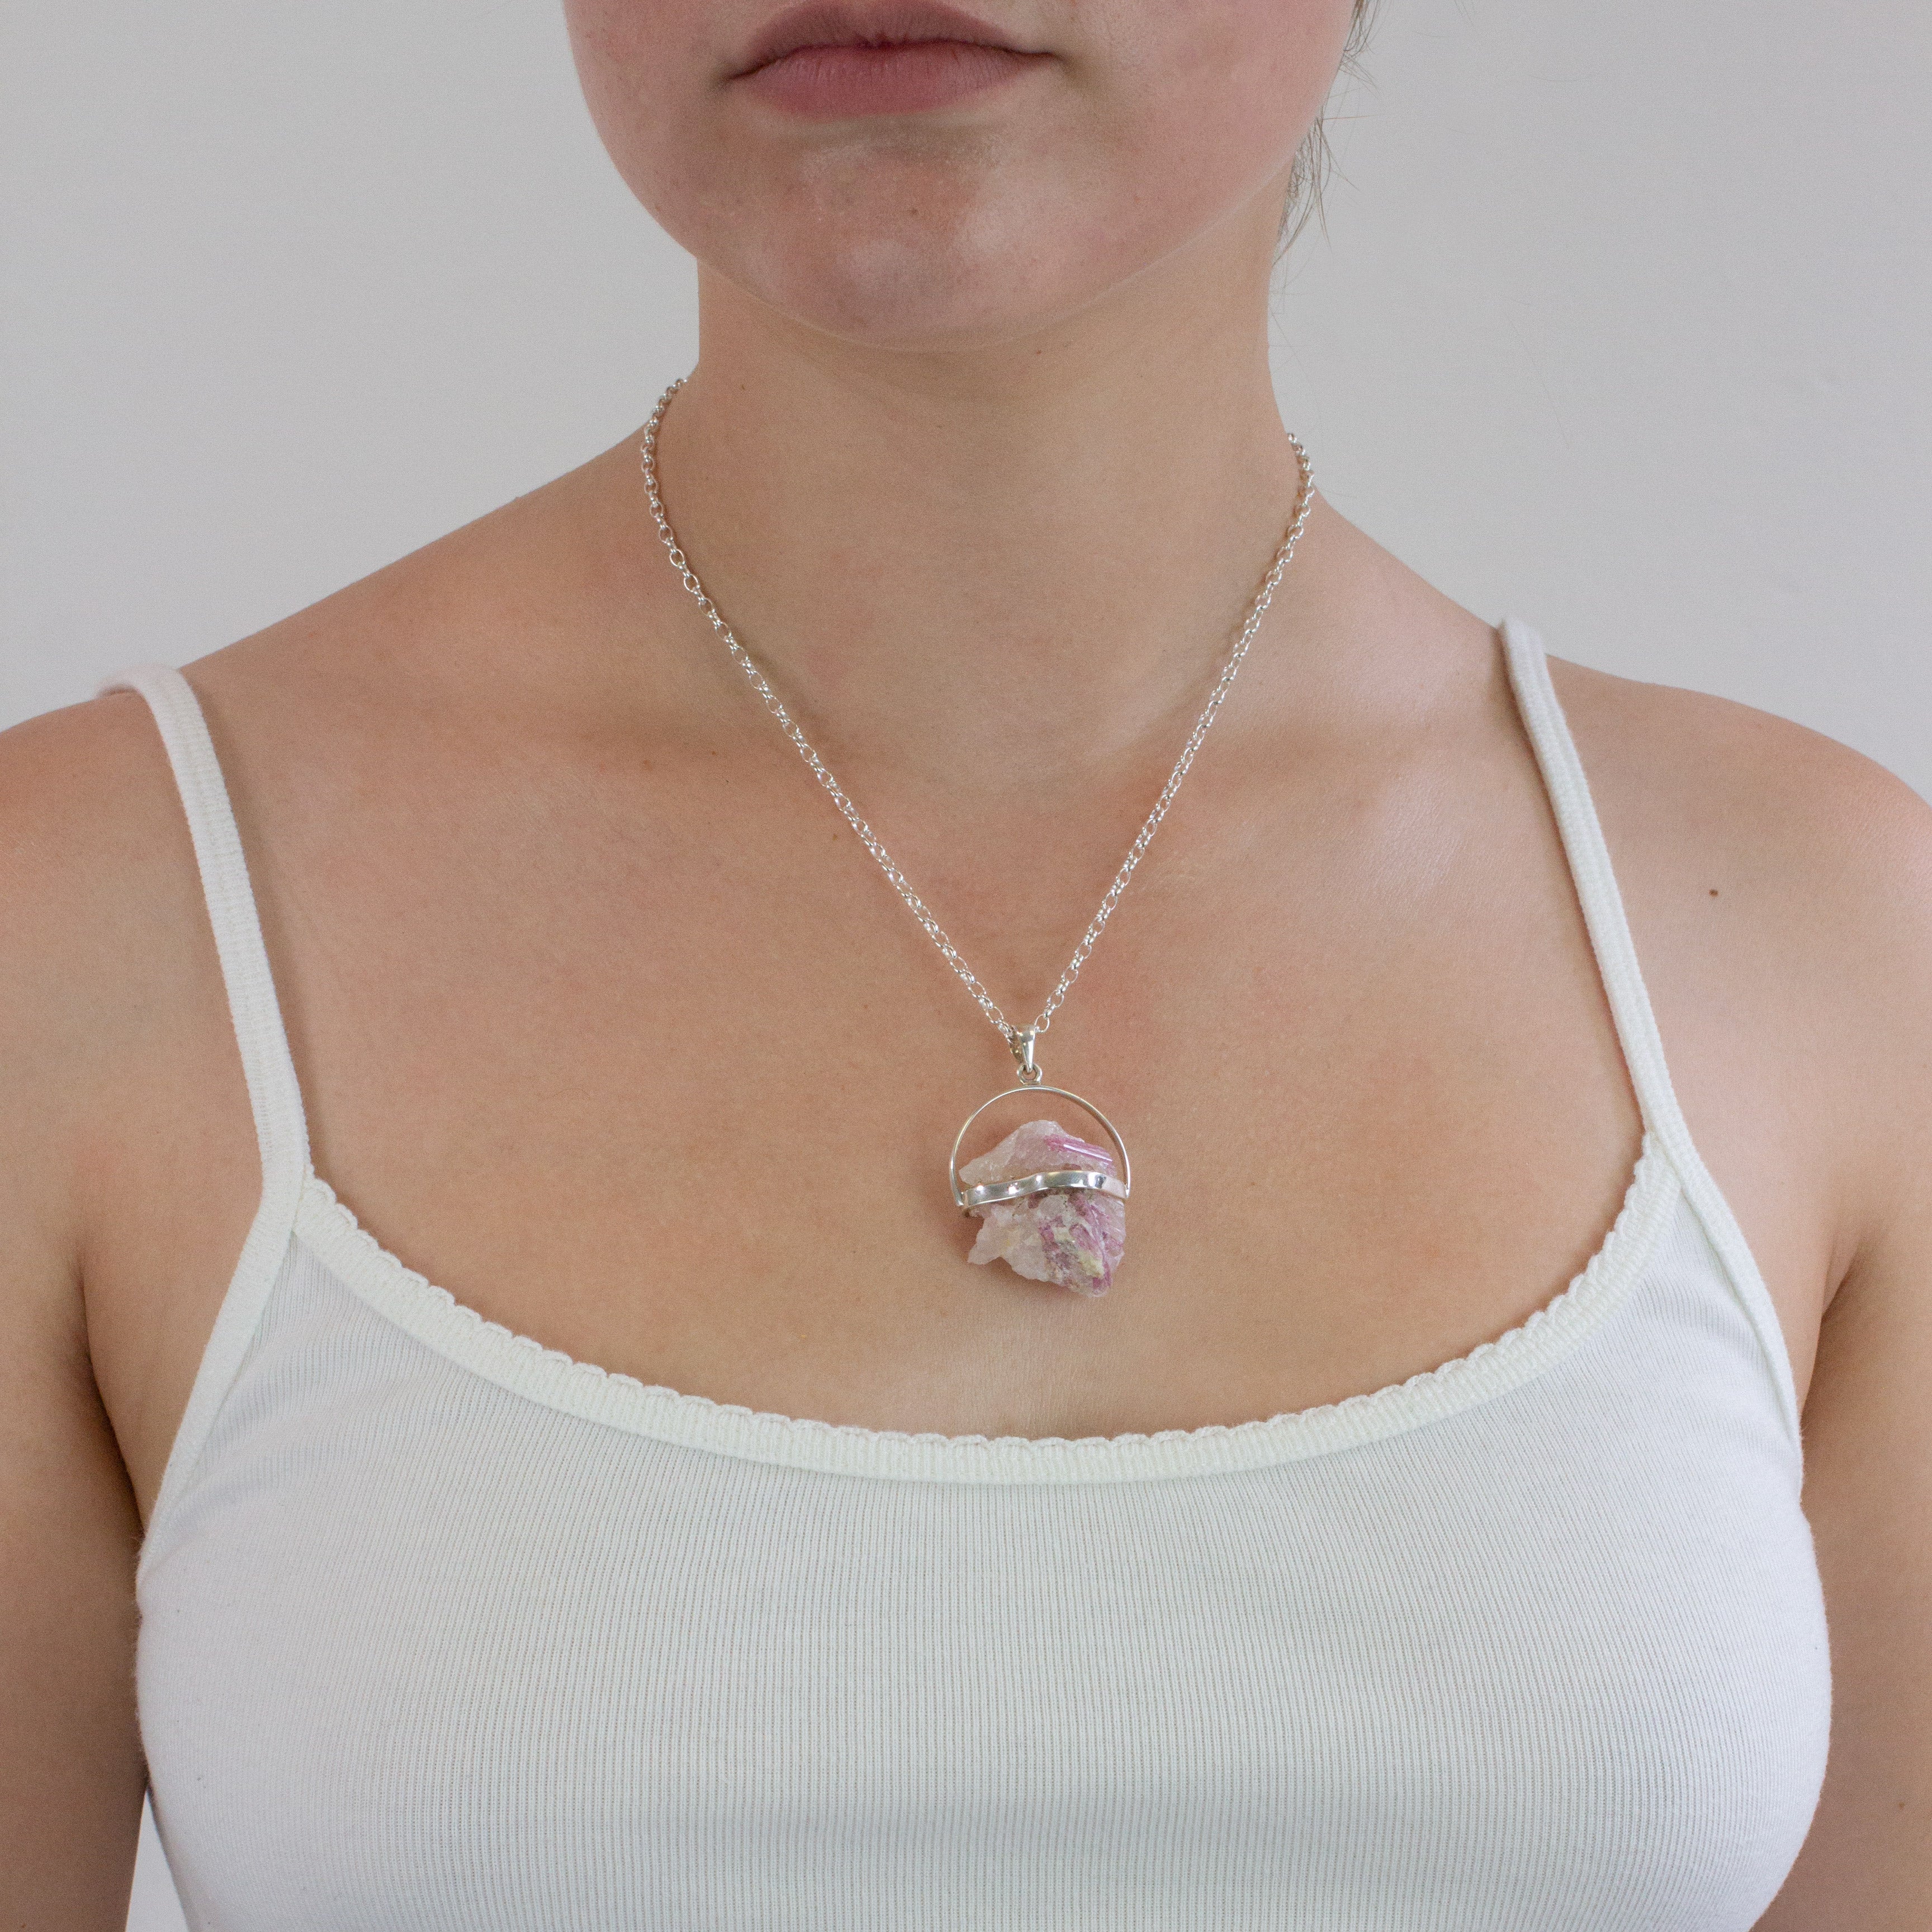 Pink Tourmaline necklace on model